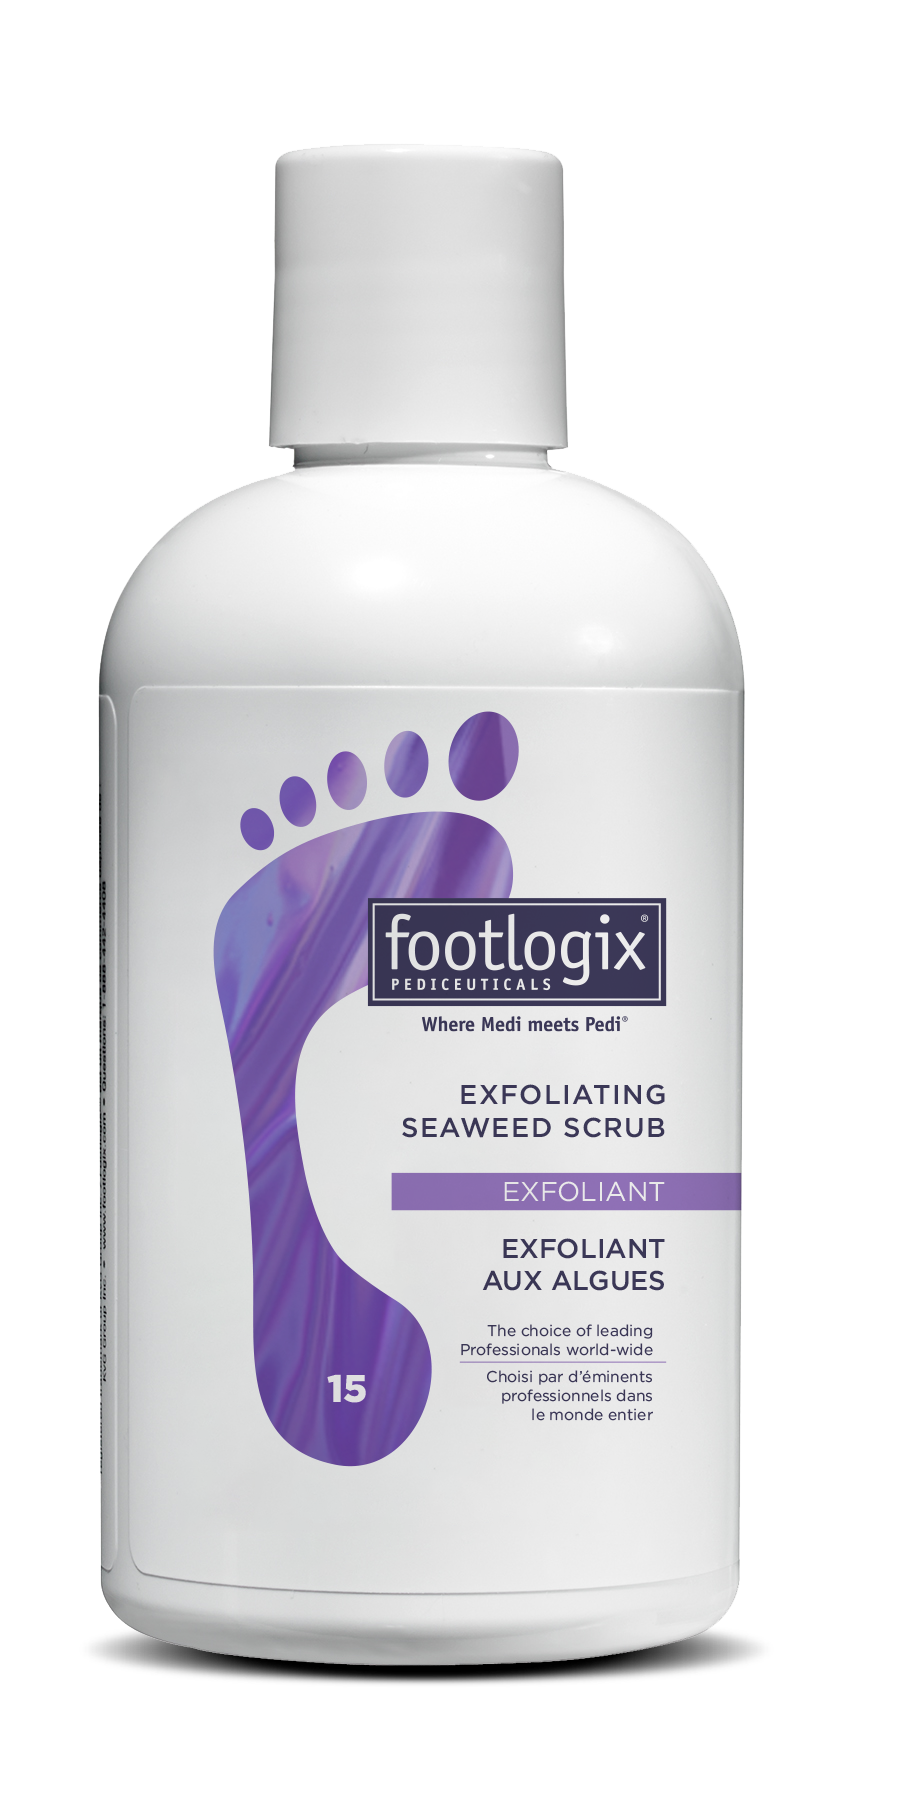 Footlogix Exfoliating Seaweed Scrub (15)